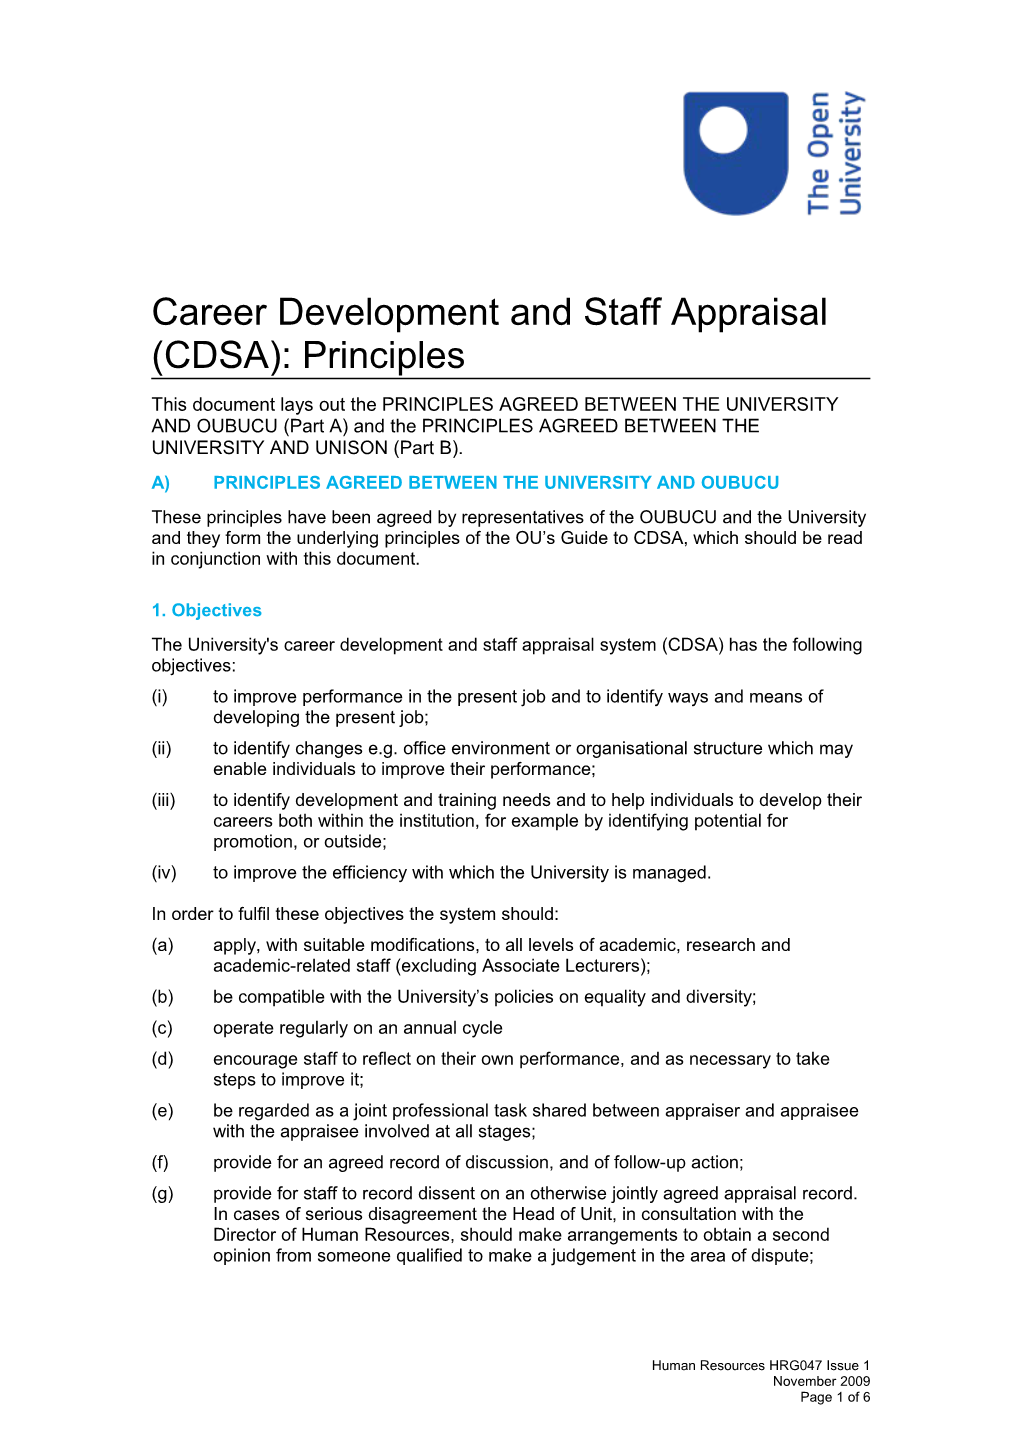 Career Development Staff Appraisal CDSA Principles